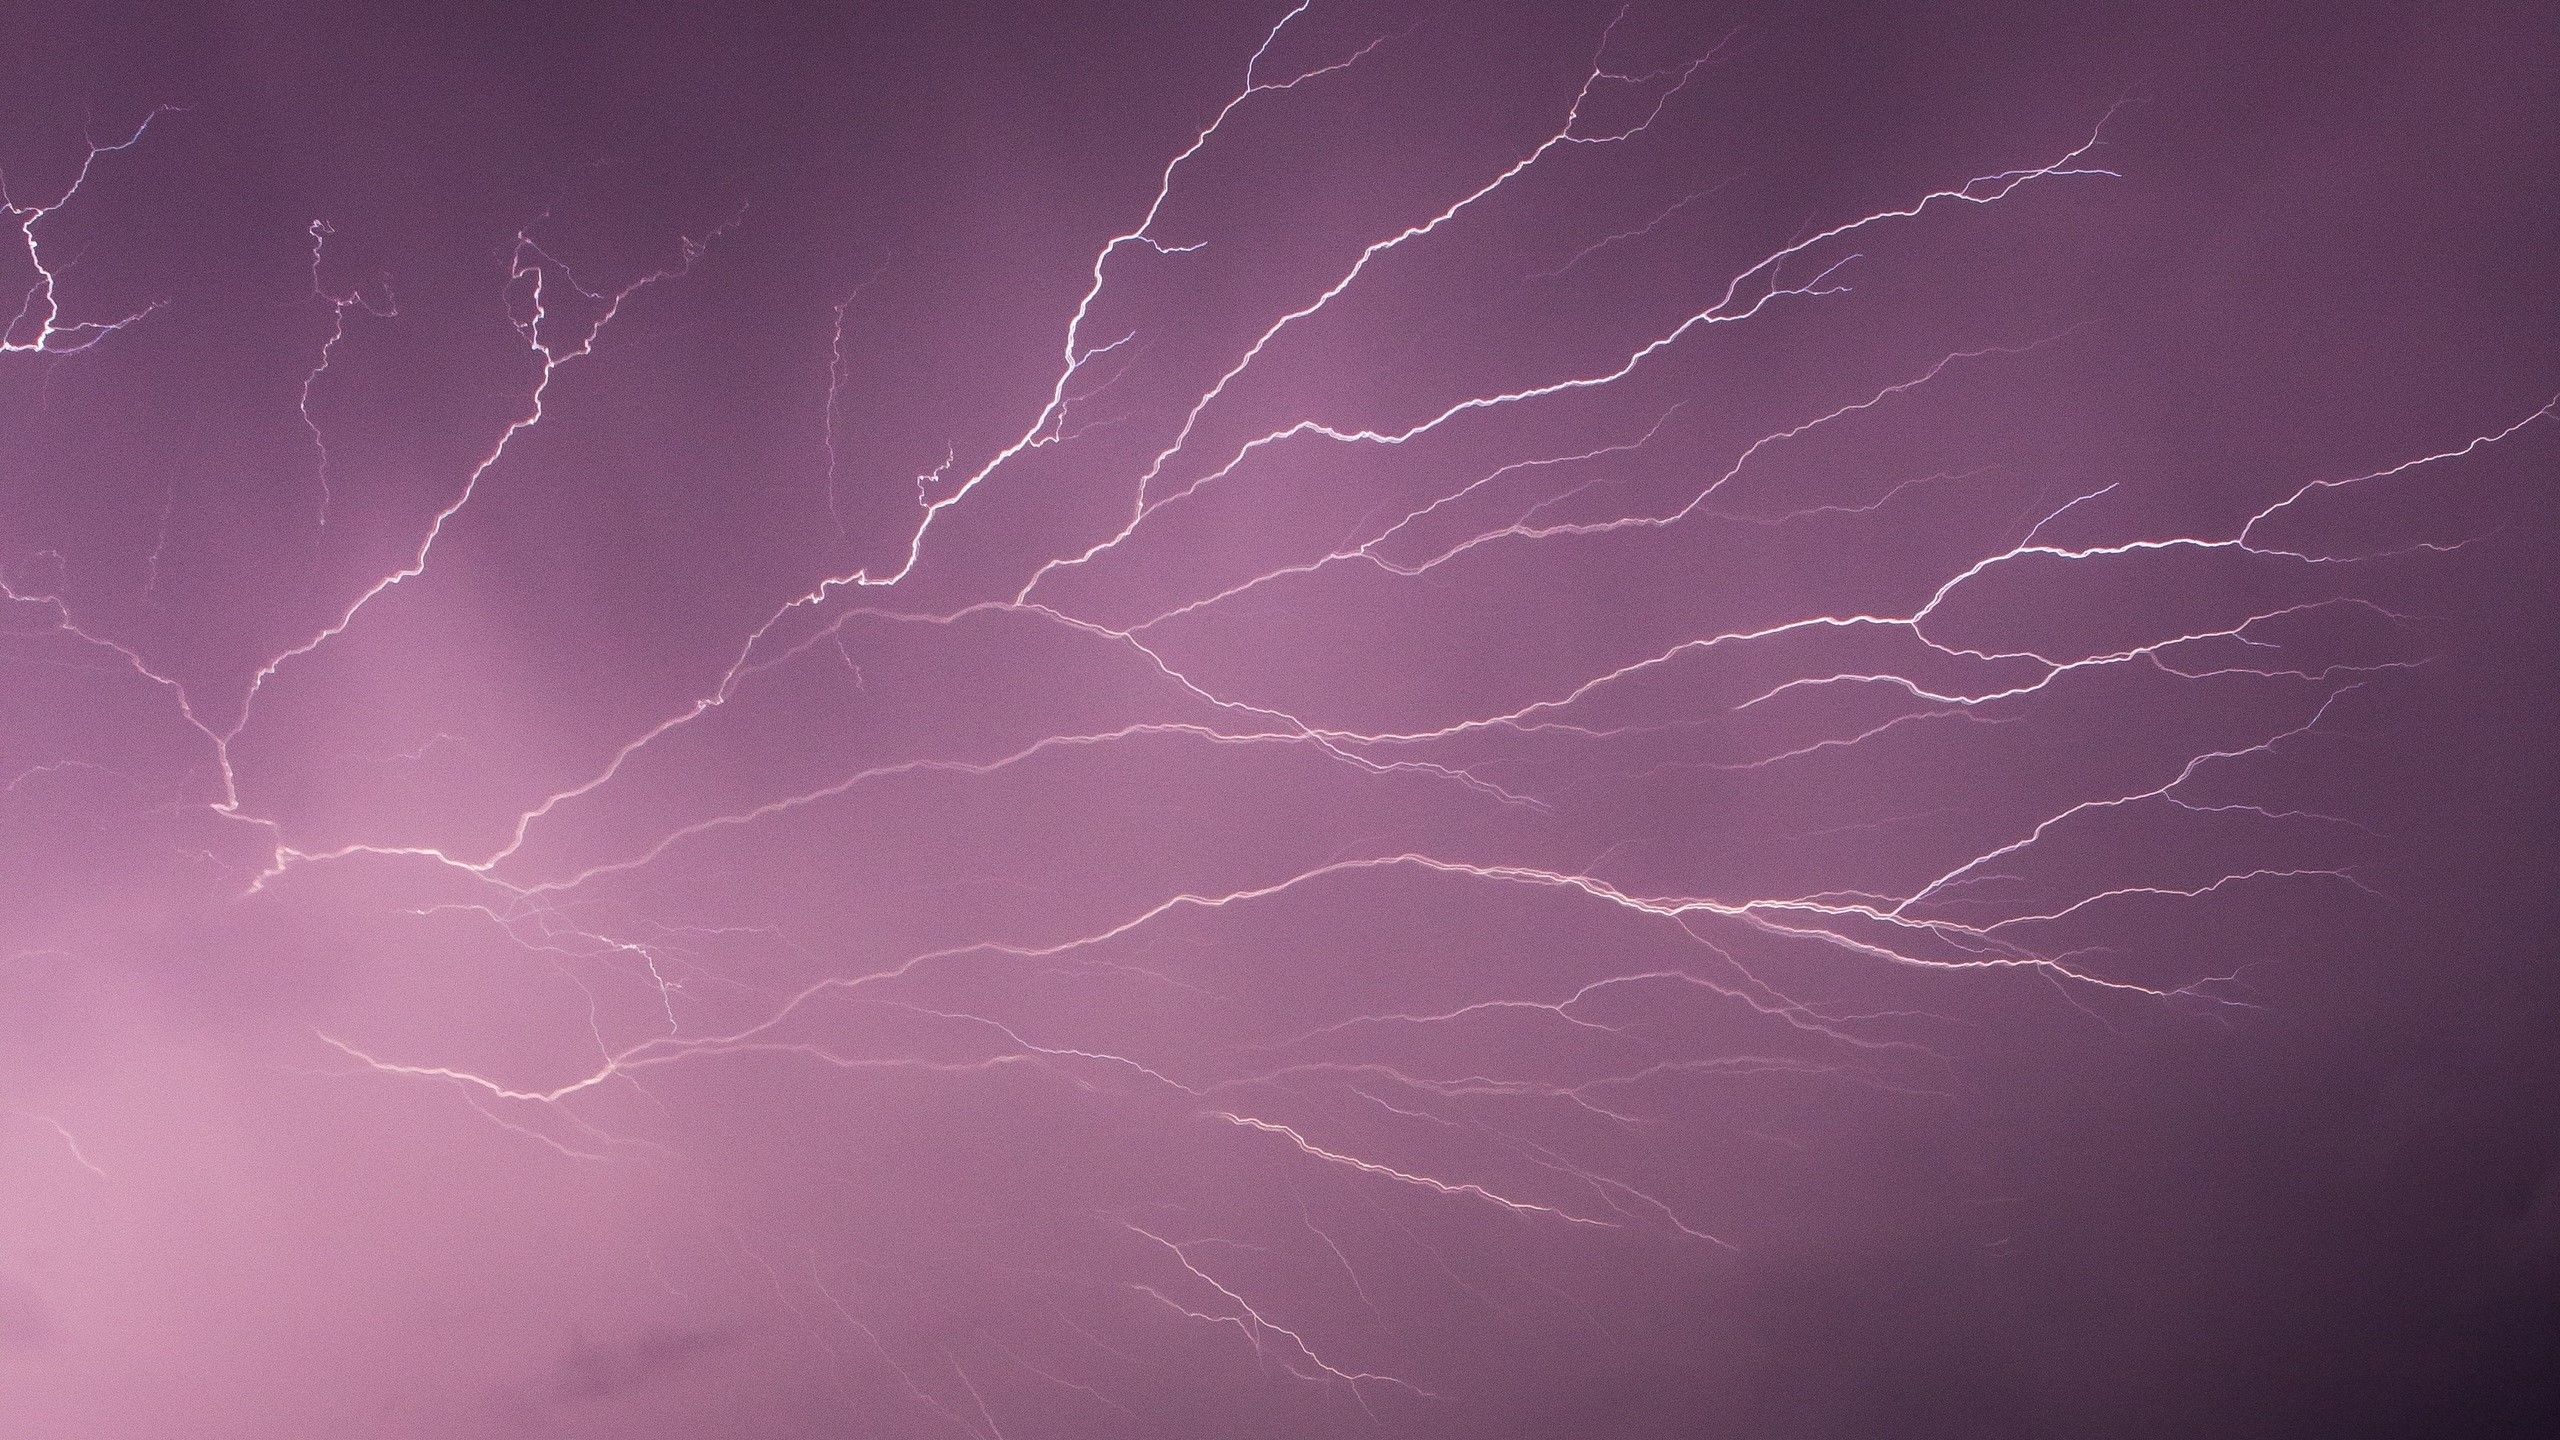 A lightning bolt is shown in the sky - Lightning